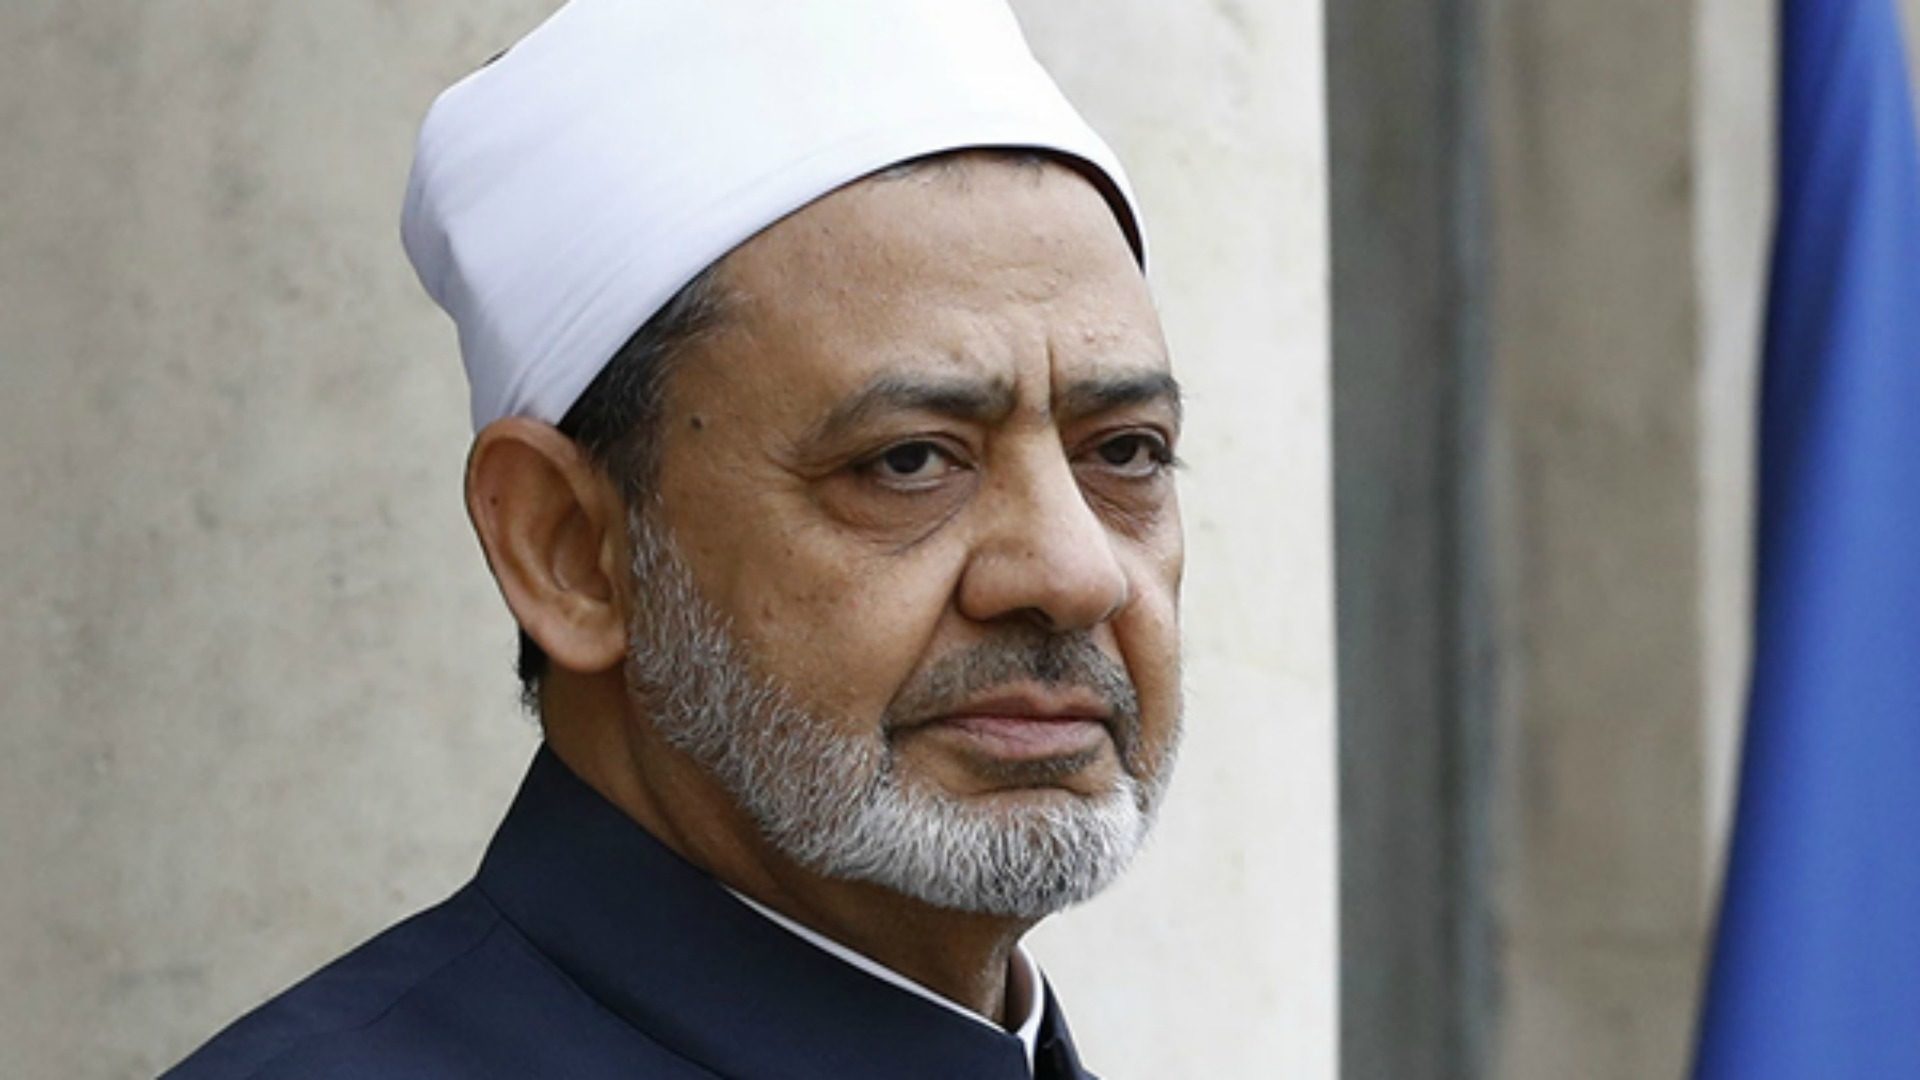 Le grand imam d'Al-Azhar, le cheikh Ahmad Al-Tayeb | © weekly.ahram.org.eg